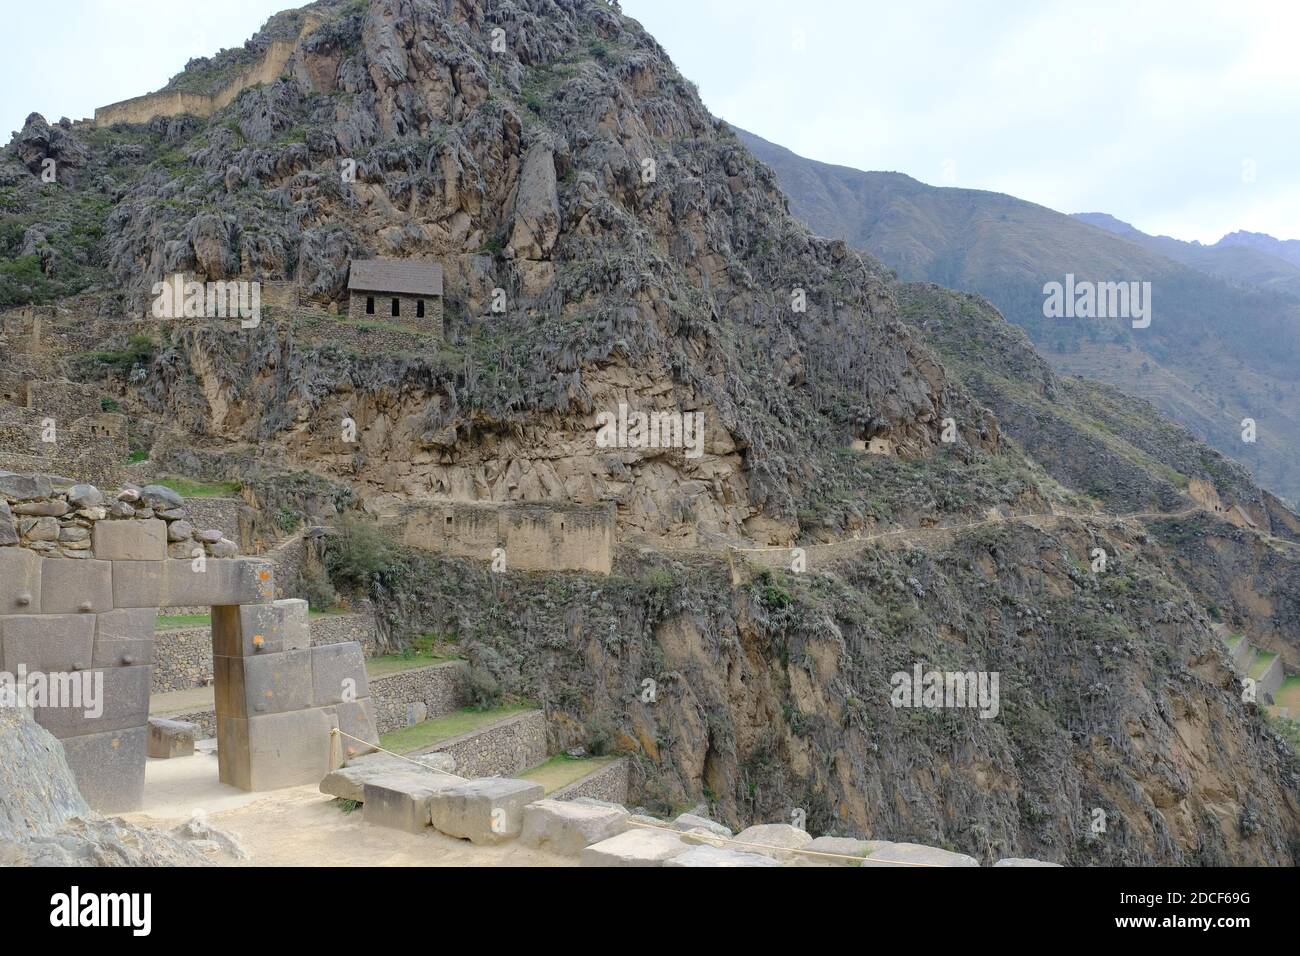 Peru Sacred Valley Ollantaytambo - Stone gate in Ollantaytambo ruins - Ruinas Ollantaytambo Stock Photo